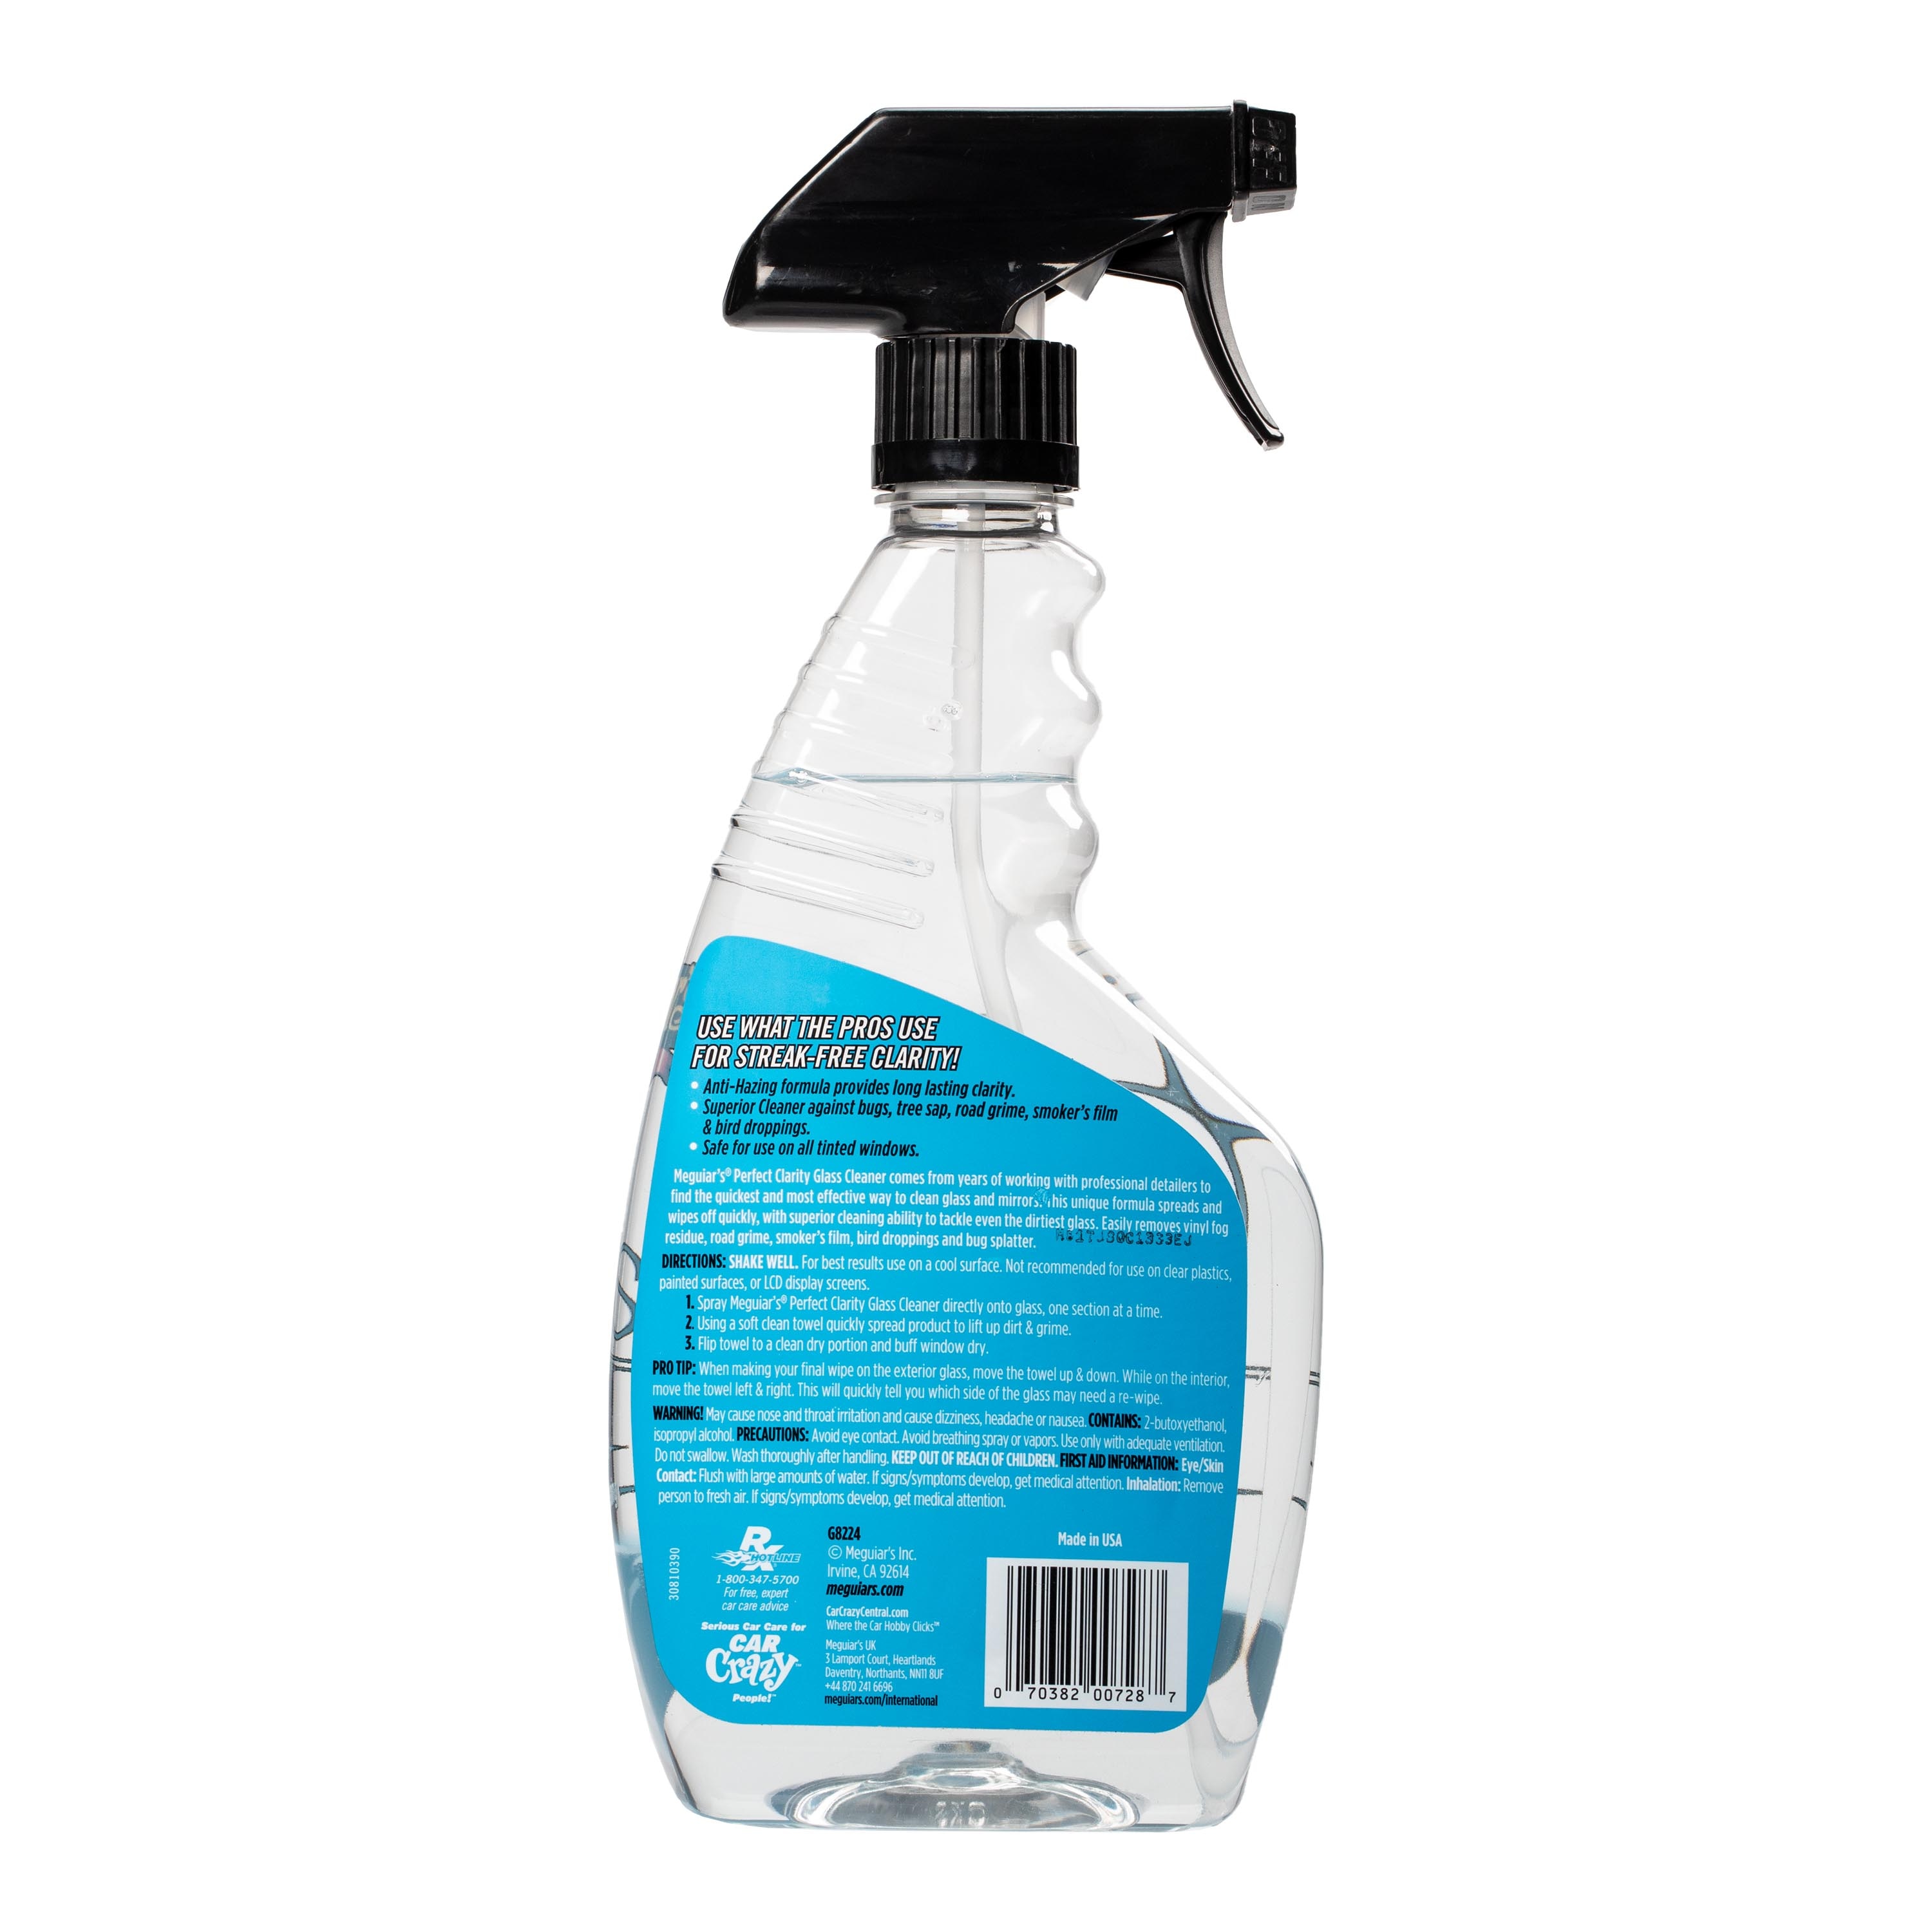 Meguiar's 24 Fluid Ounces Pump Spray Glass Cleaner in the Glass